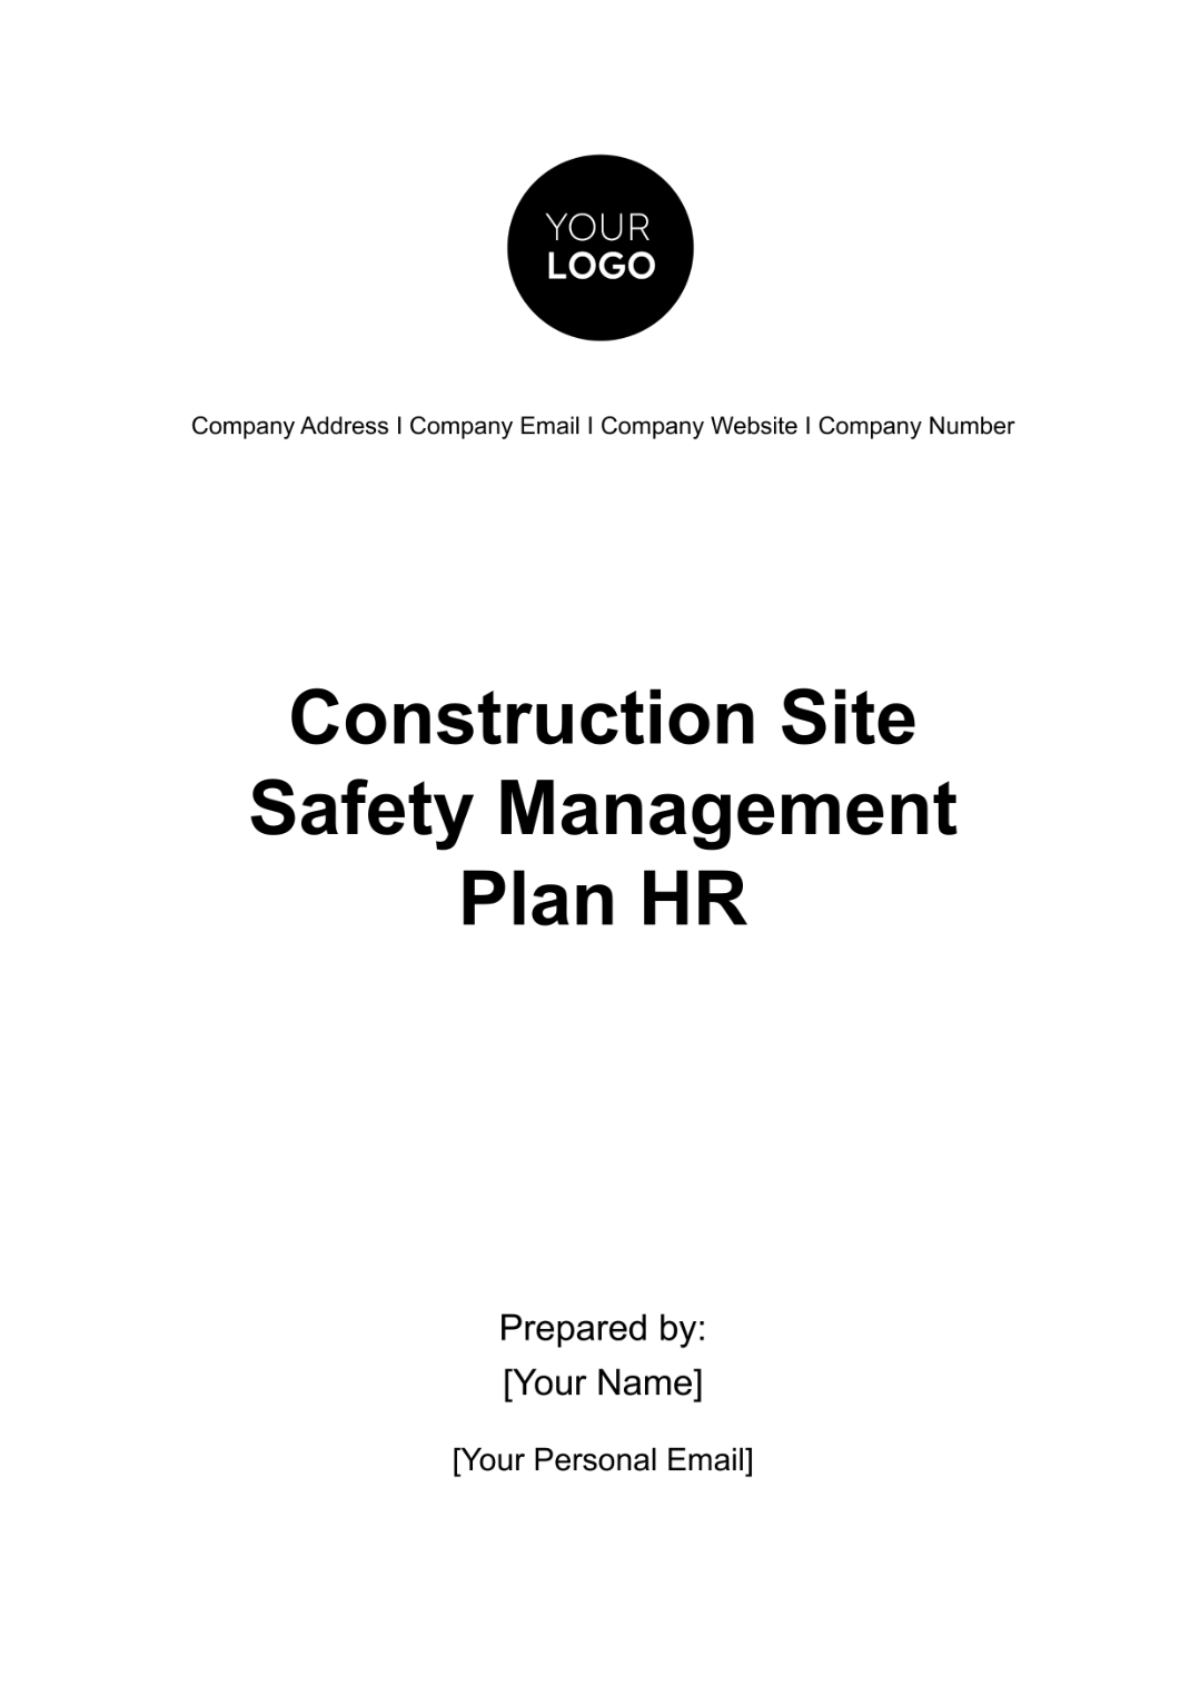 Construction Site Safety Management Plan HR Template